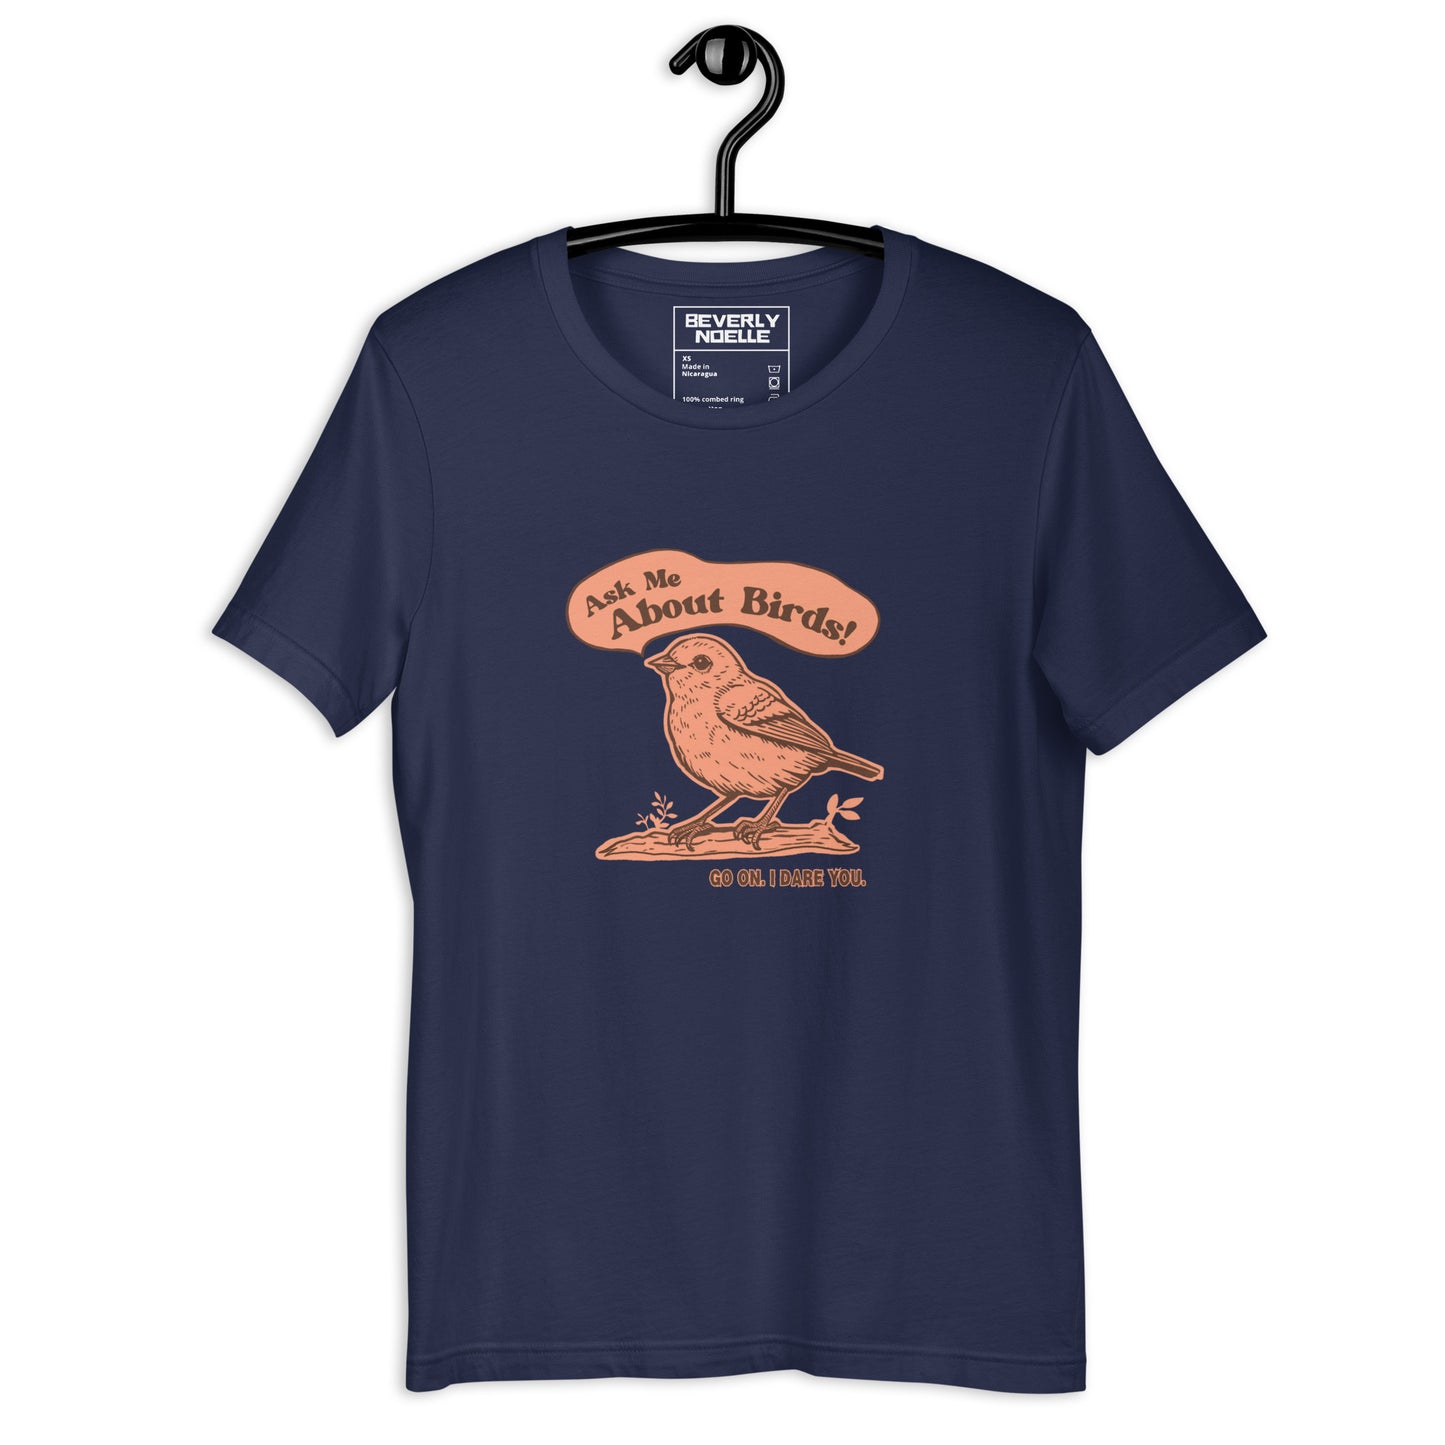 Ask Me About Birds Unisex T-Shirt